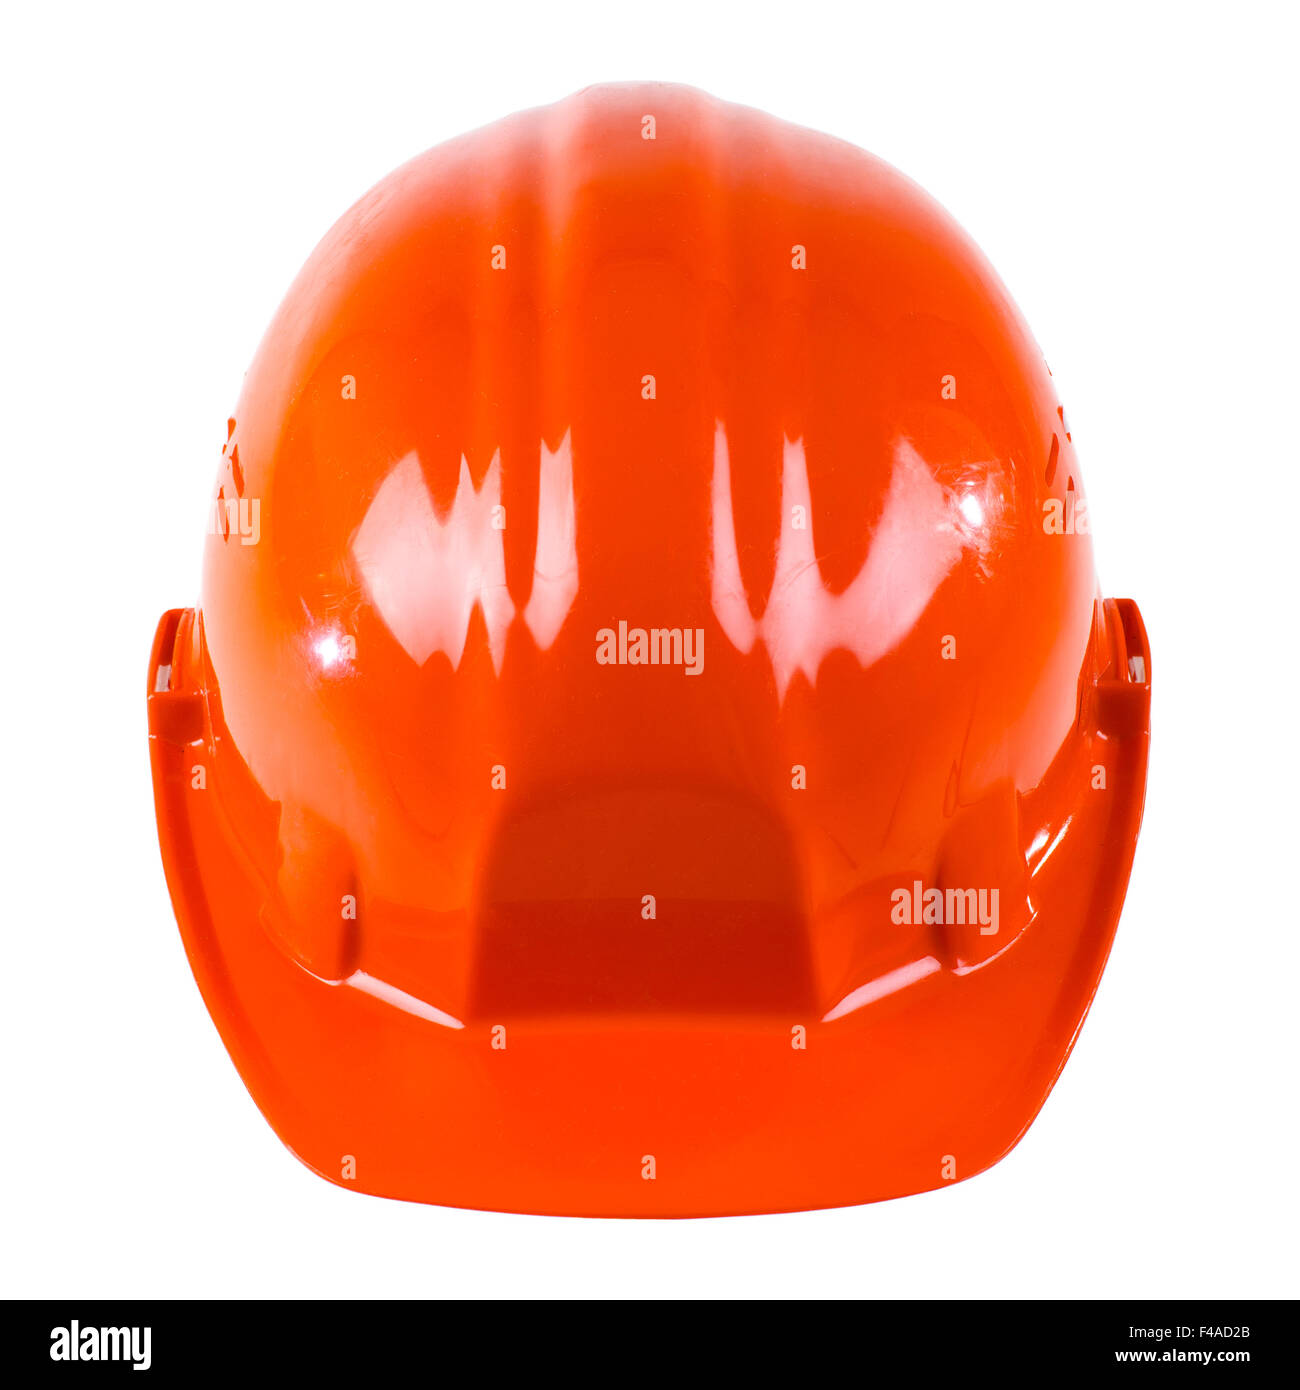 safety cap Stock Photo